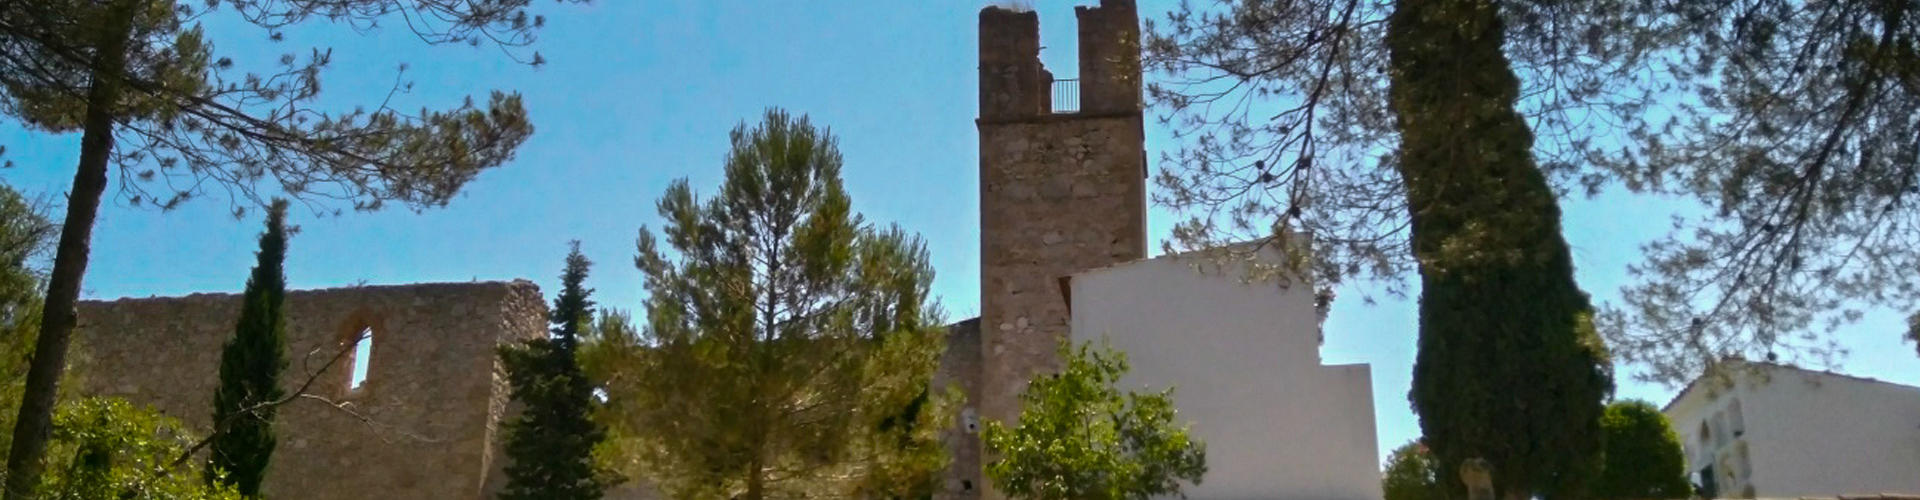 Esglesia de Sant Vicenç. Castellolí